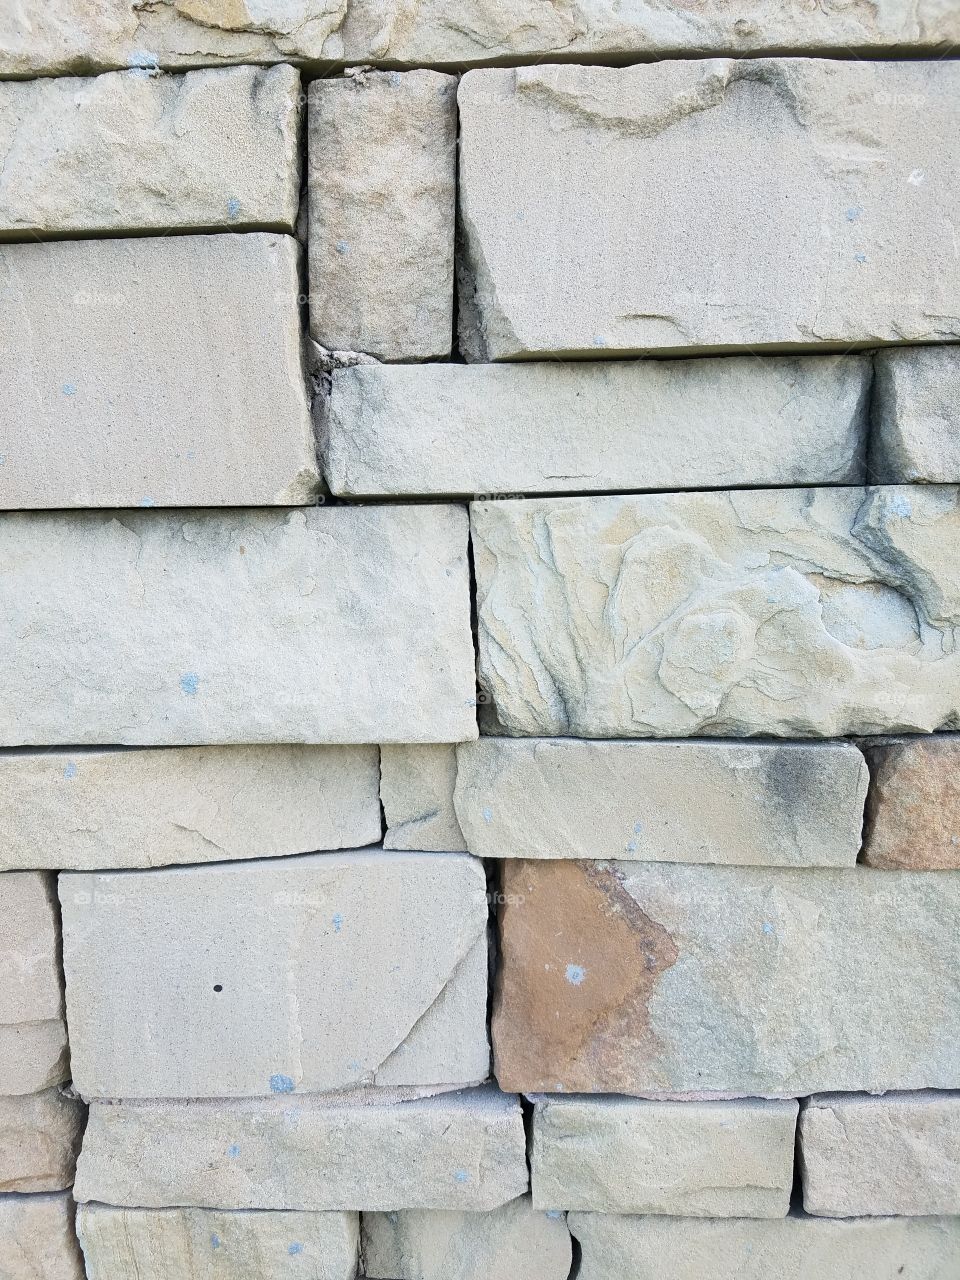 bricks abstract Masonry